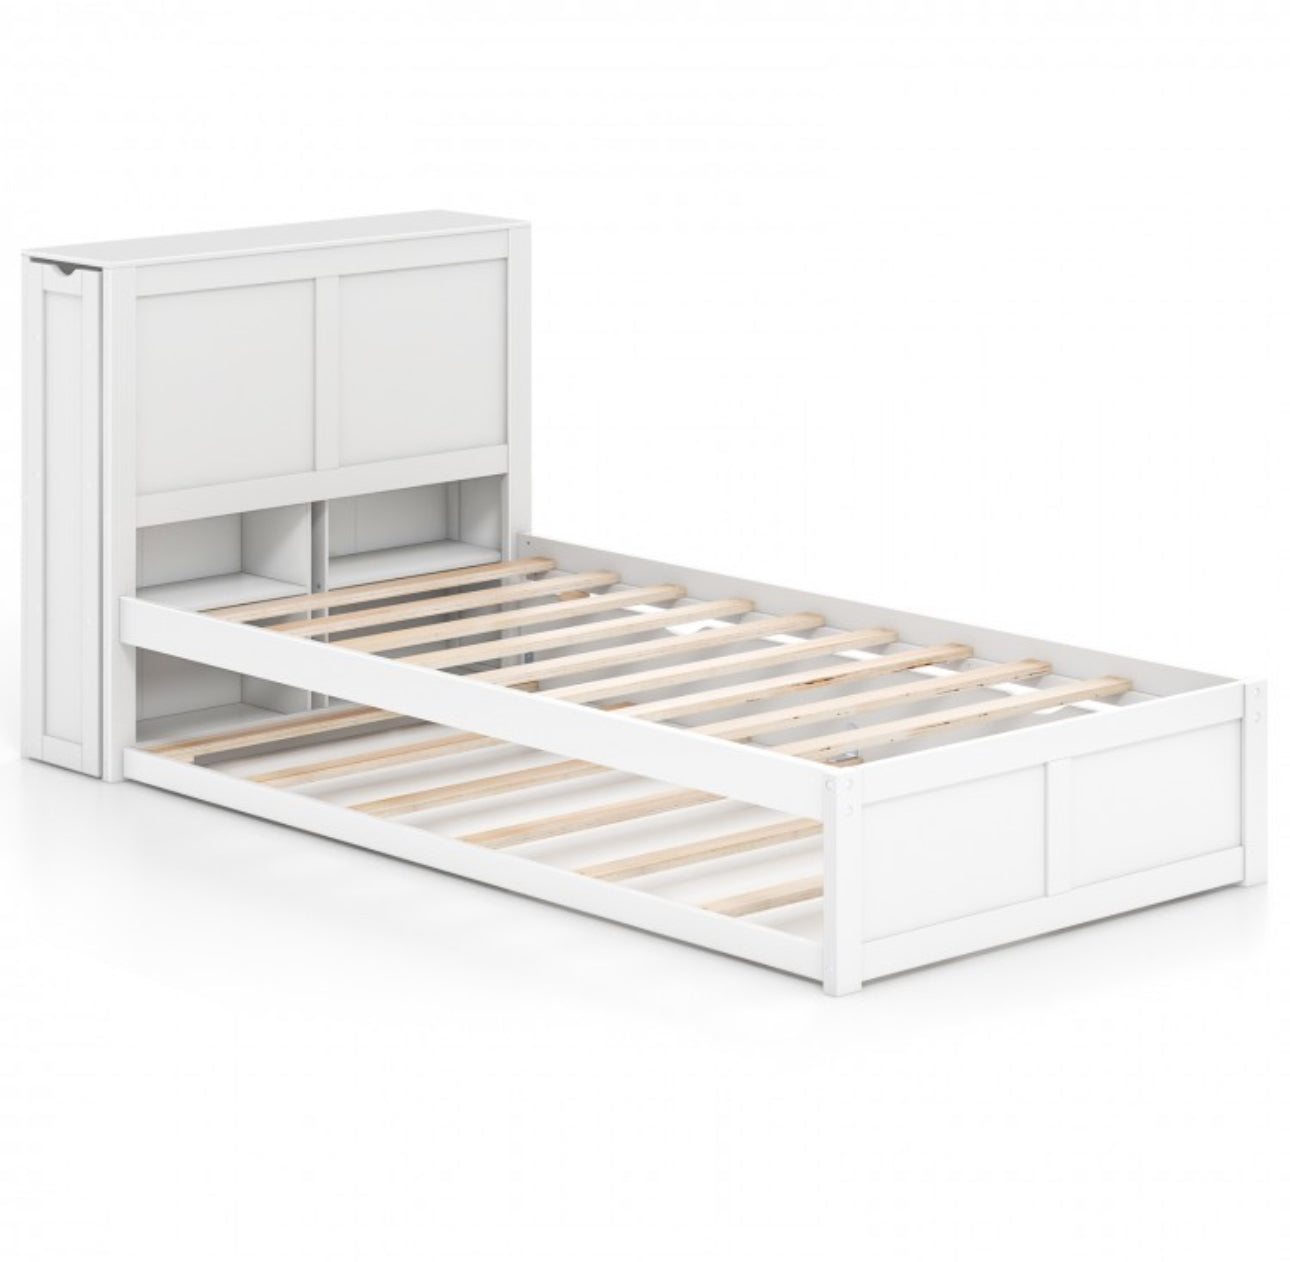 Elegant & Modern Very Comfortable Full Or Twin Kids, Children Wooden Platform Bed With Trundle Storage | Headboard | Bookshelf